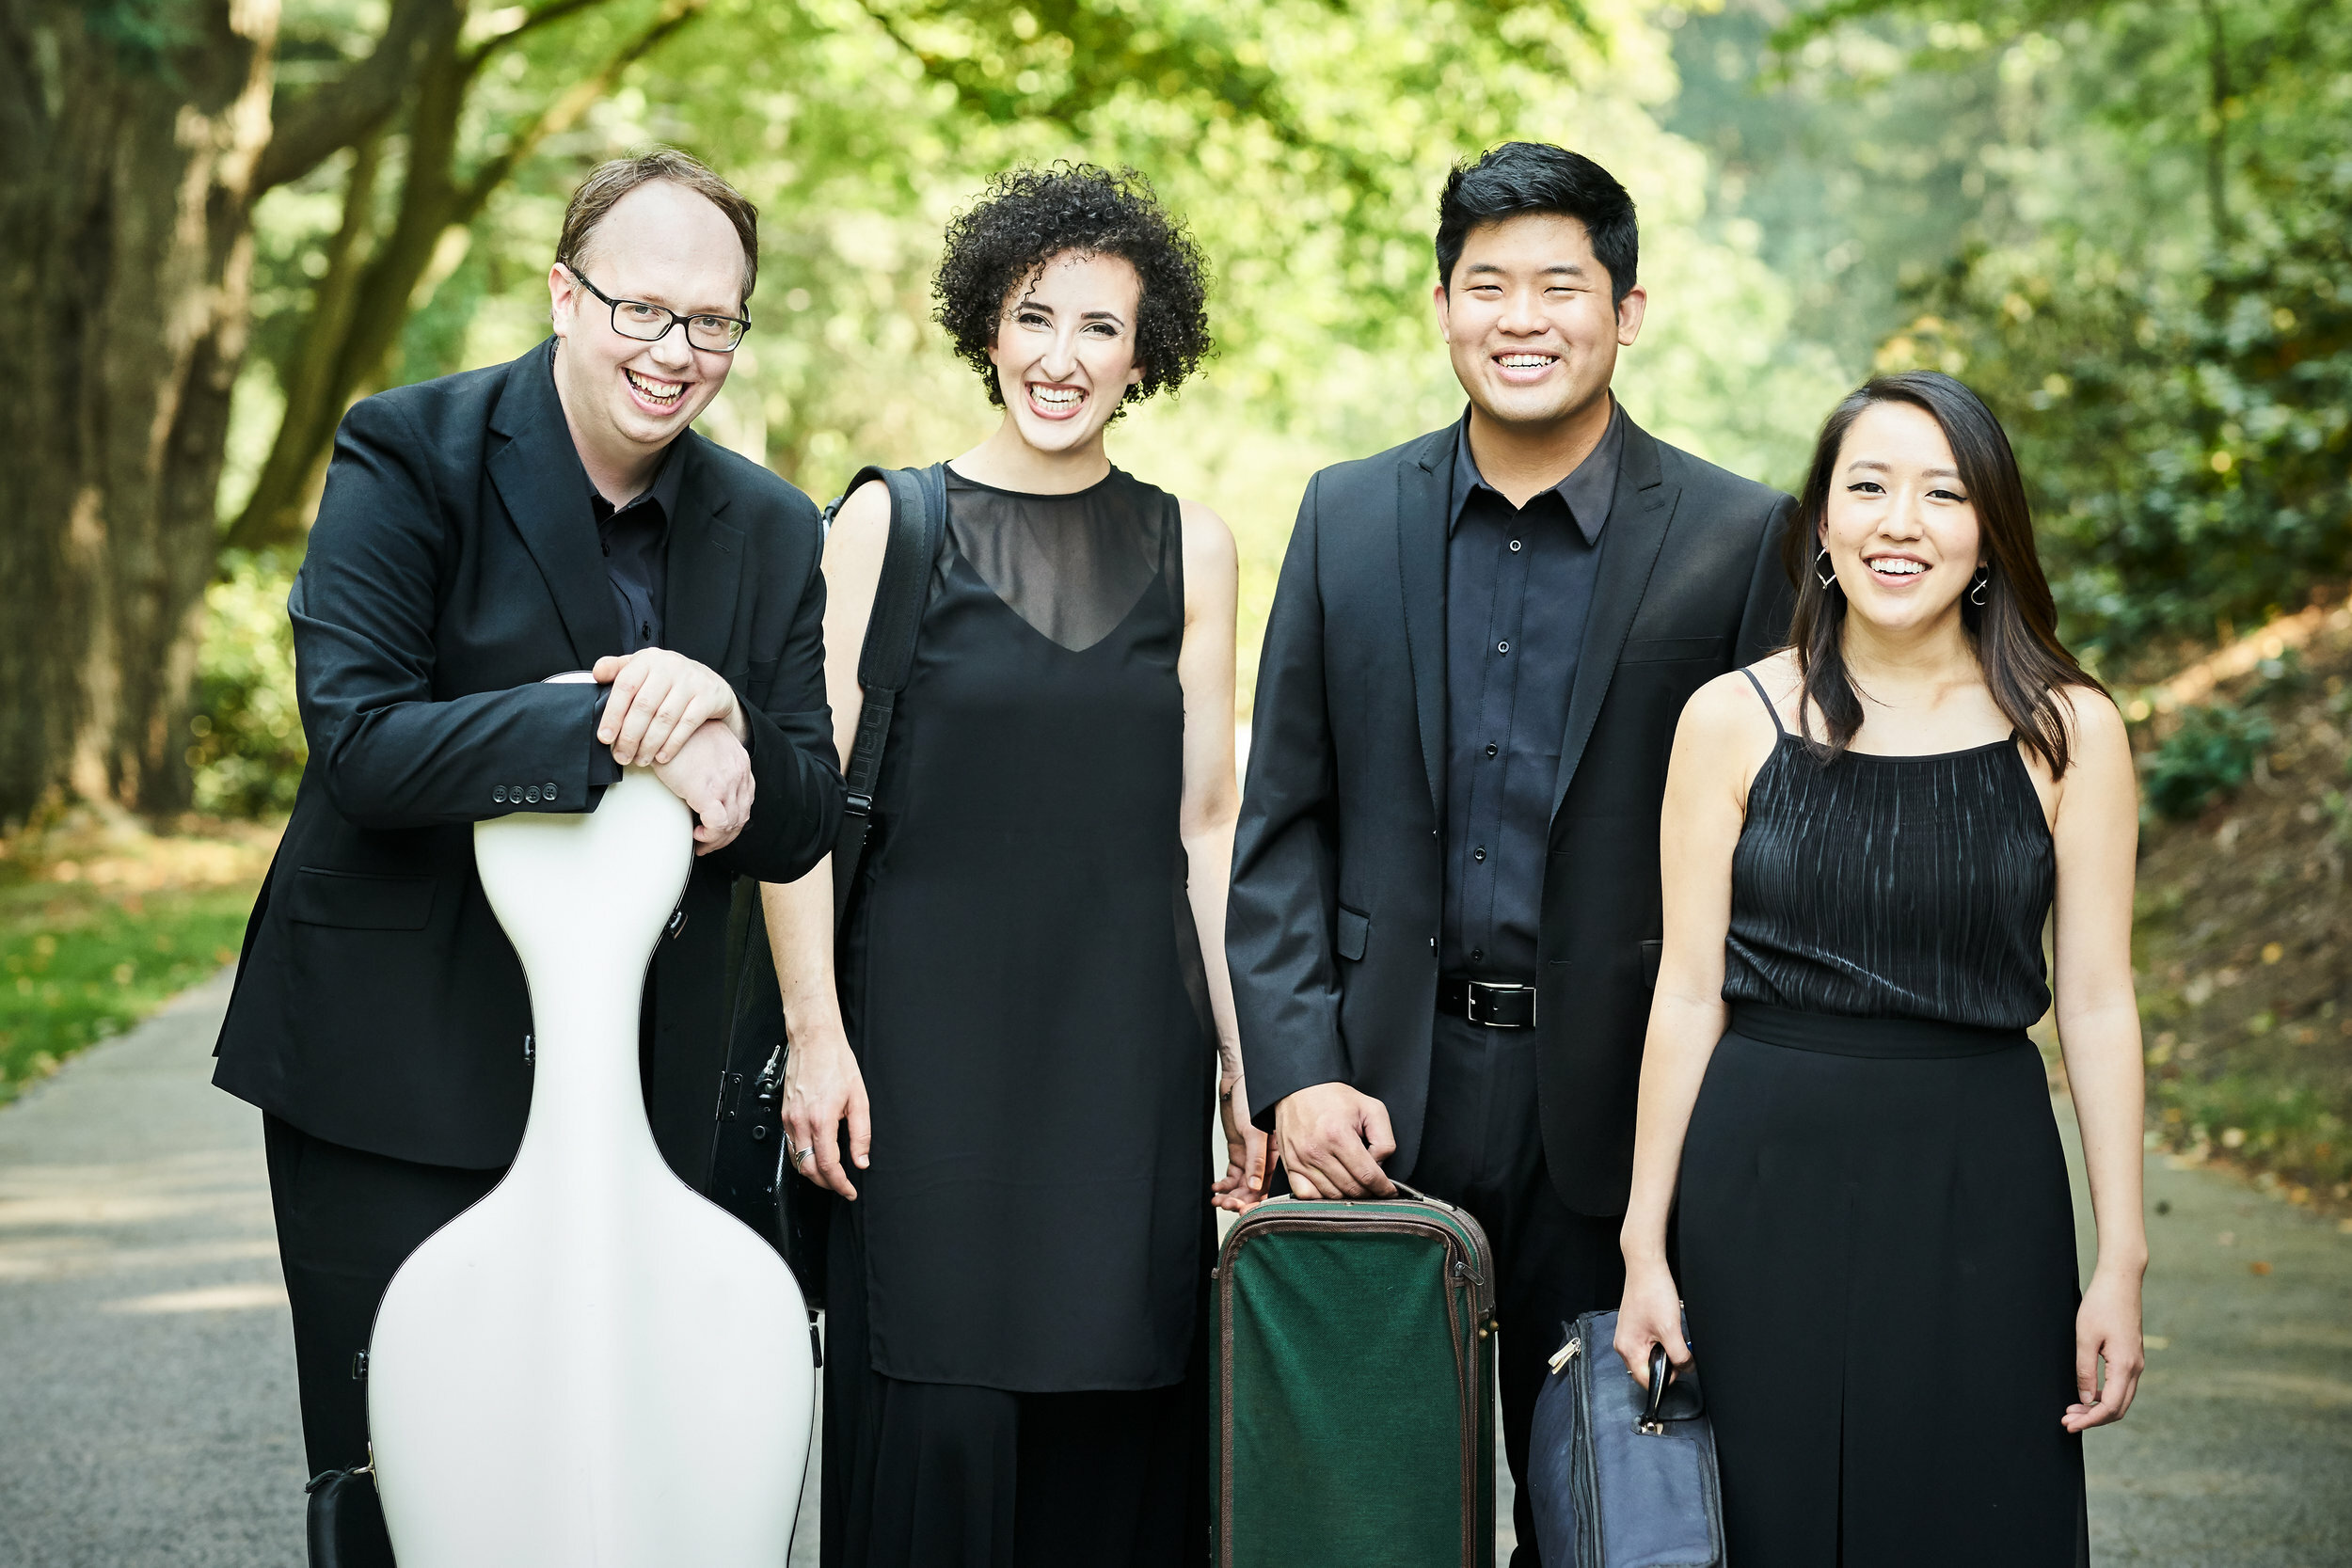 Verona Quartet, from left: Jonathan Dormand, cello; Abigail Rojansky, viola; Jonathan One, violin; Dorothy Ro, violin. KAUPO KIKKAS